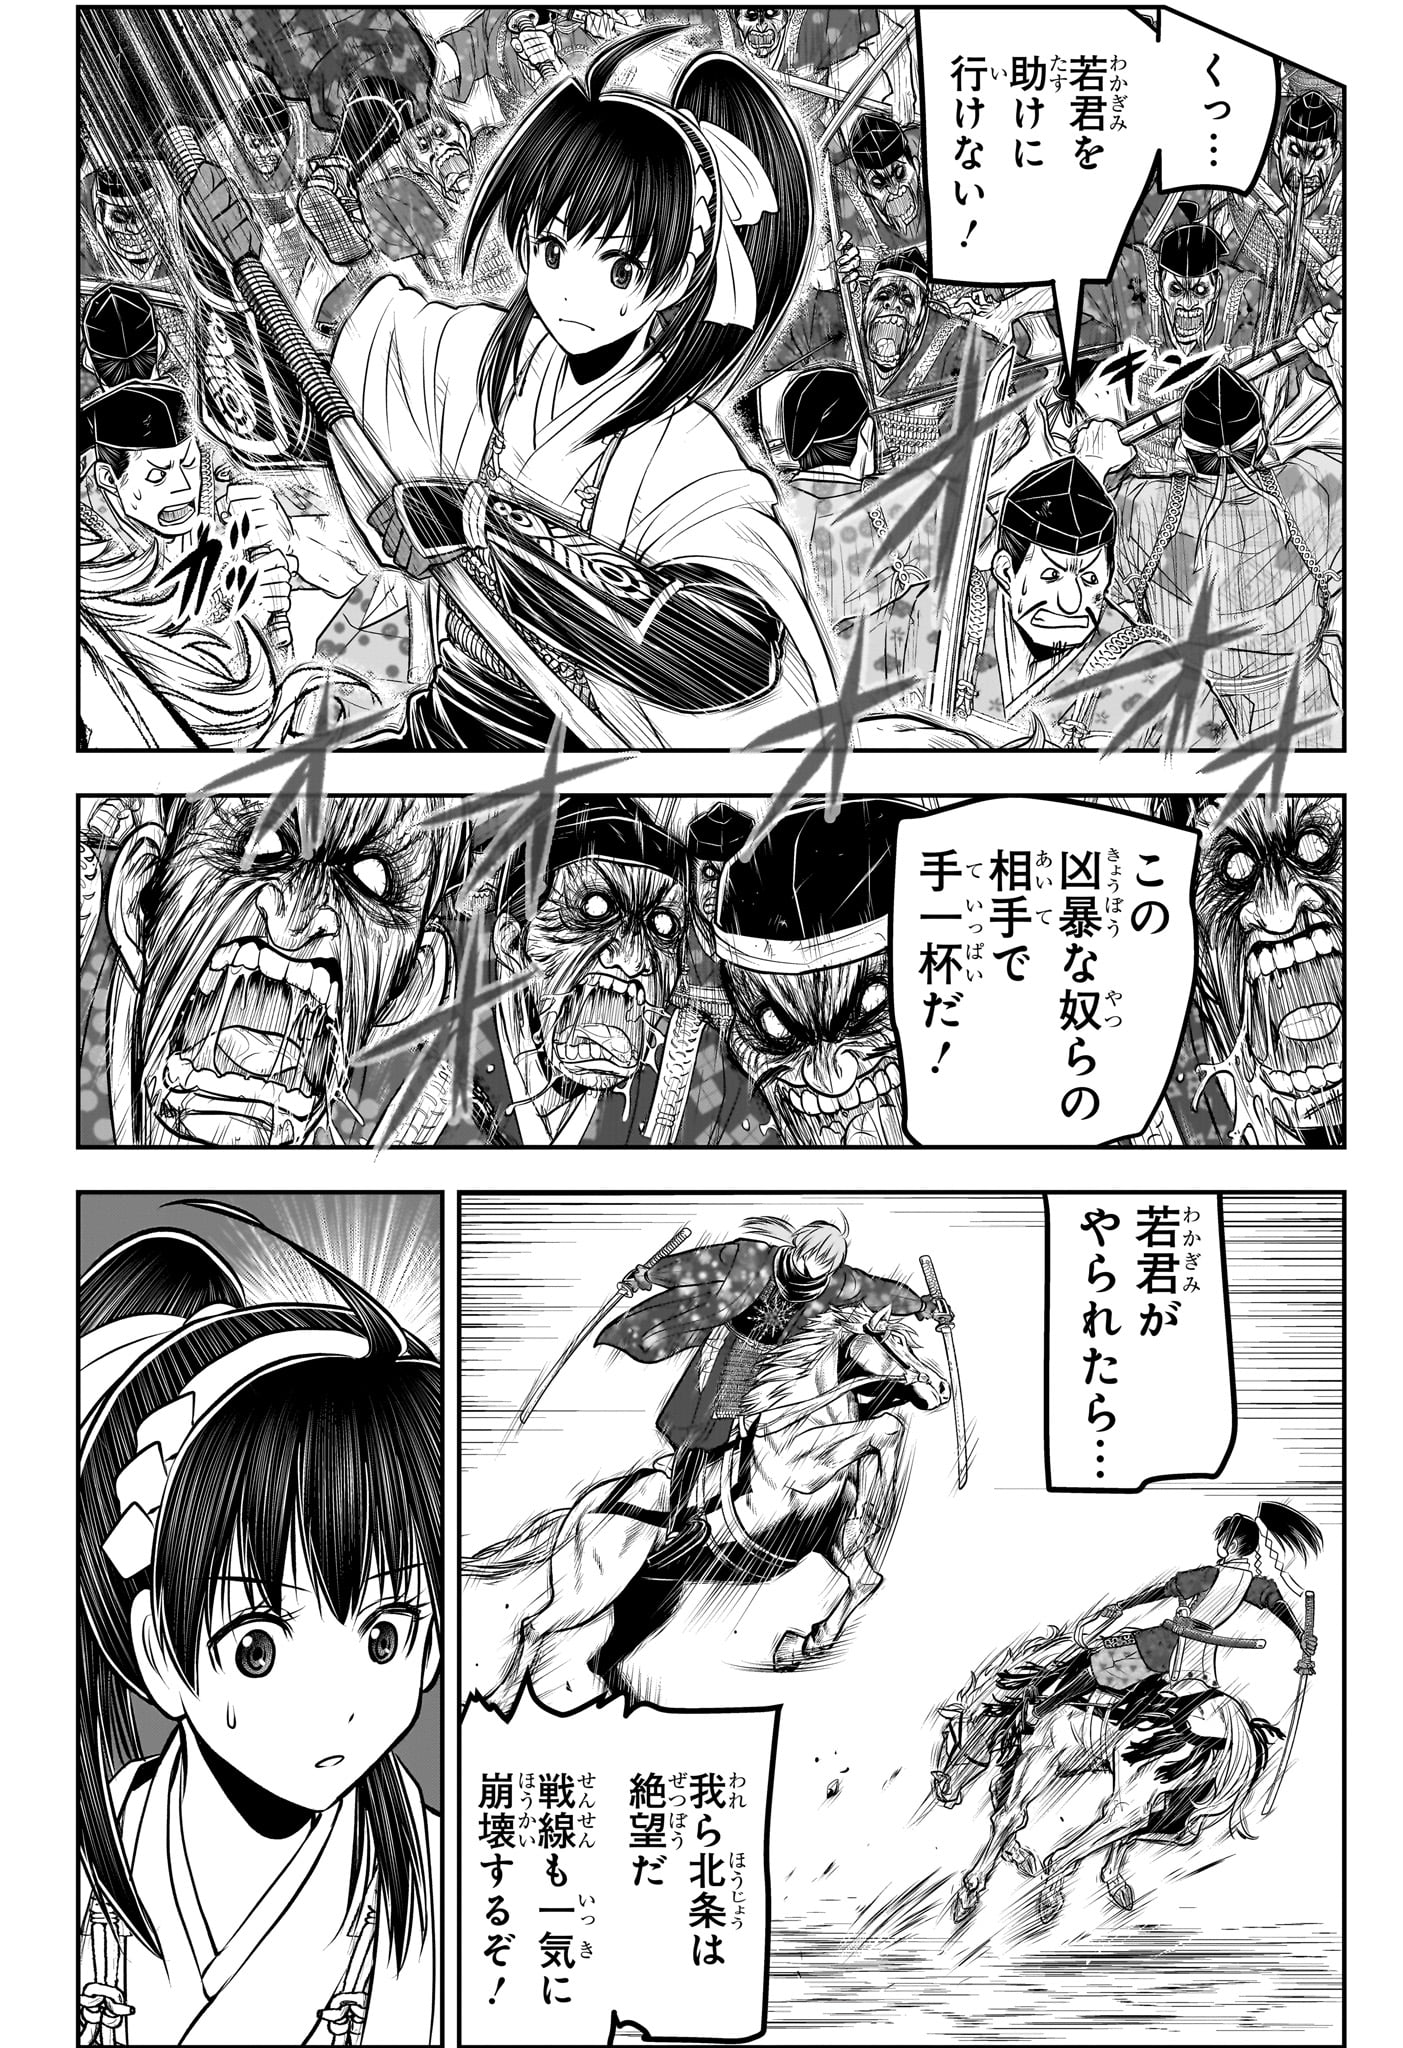 Nige Jouzu no Wakagimi - Chapter 160 - Page 6